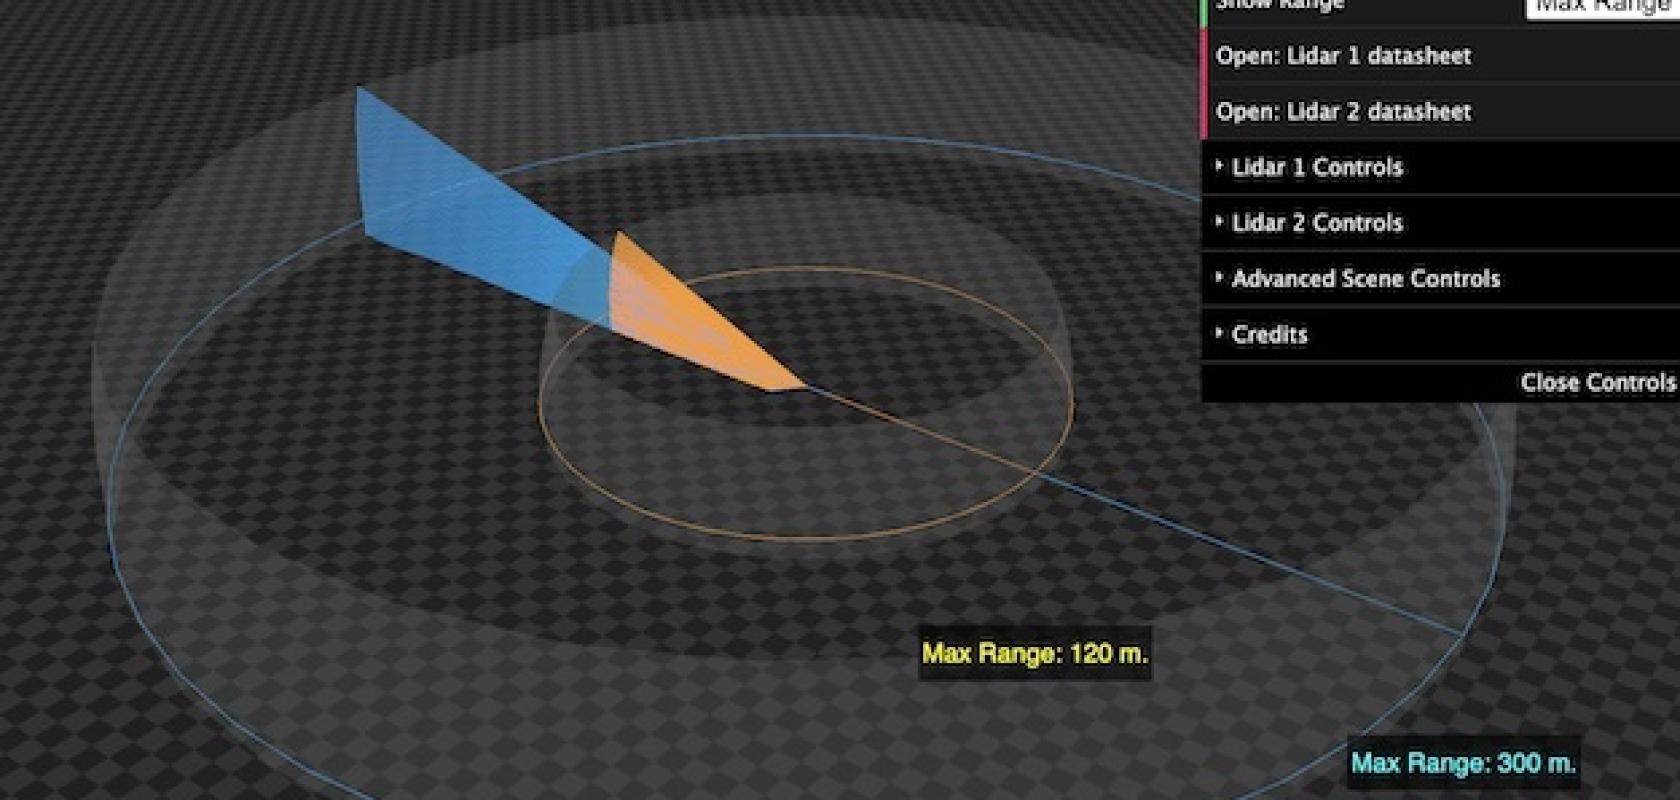 Tangram Vision’s open-source lidar comparison tool, providing a visual comparison of the maximum range of two lidar sensors